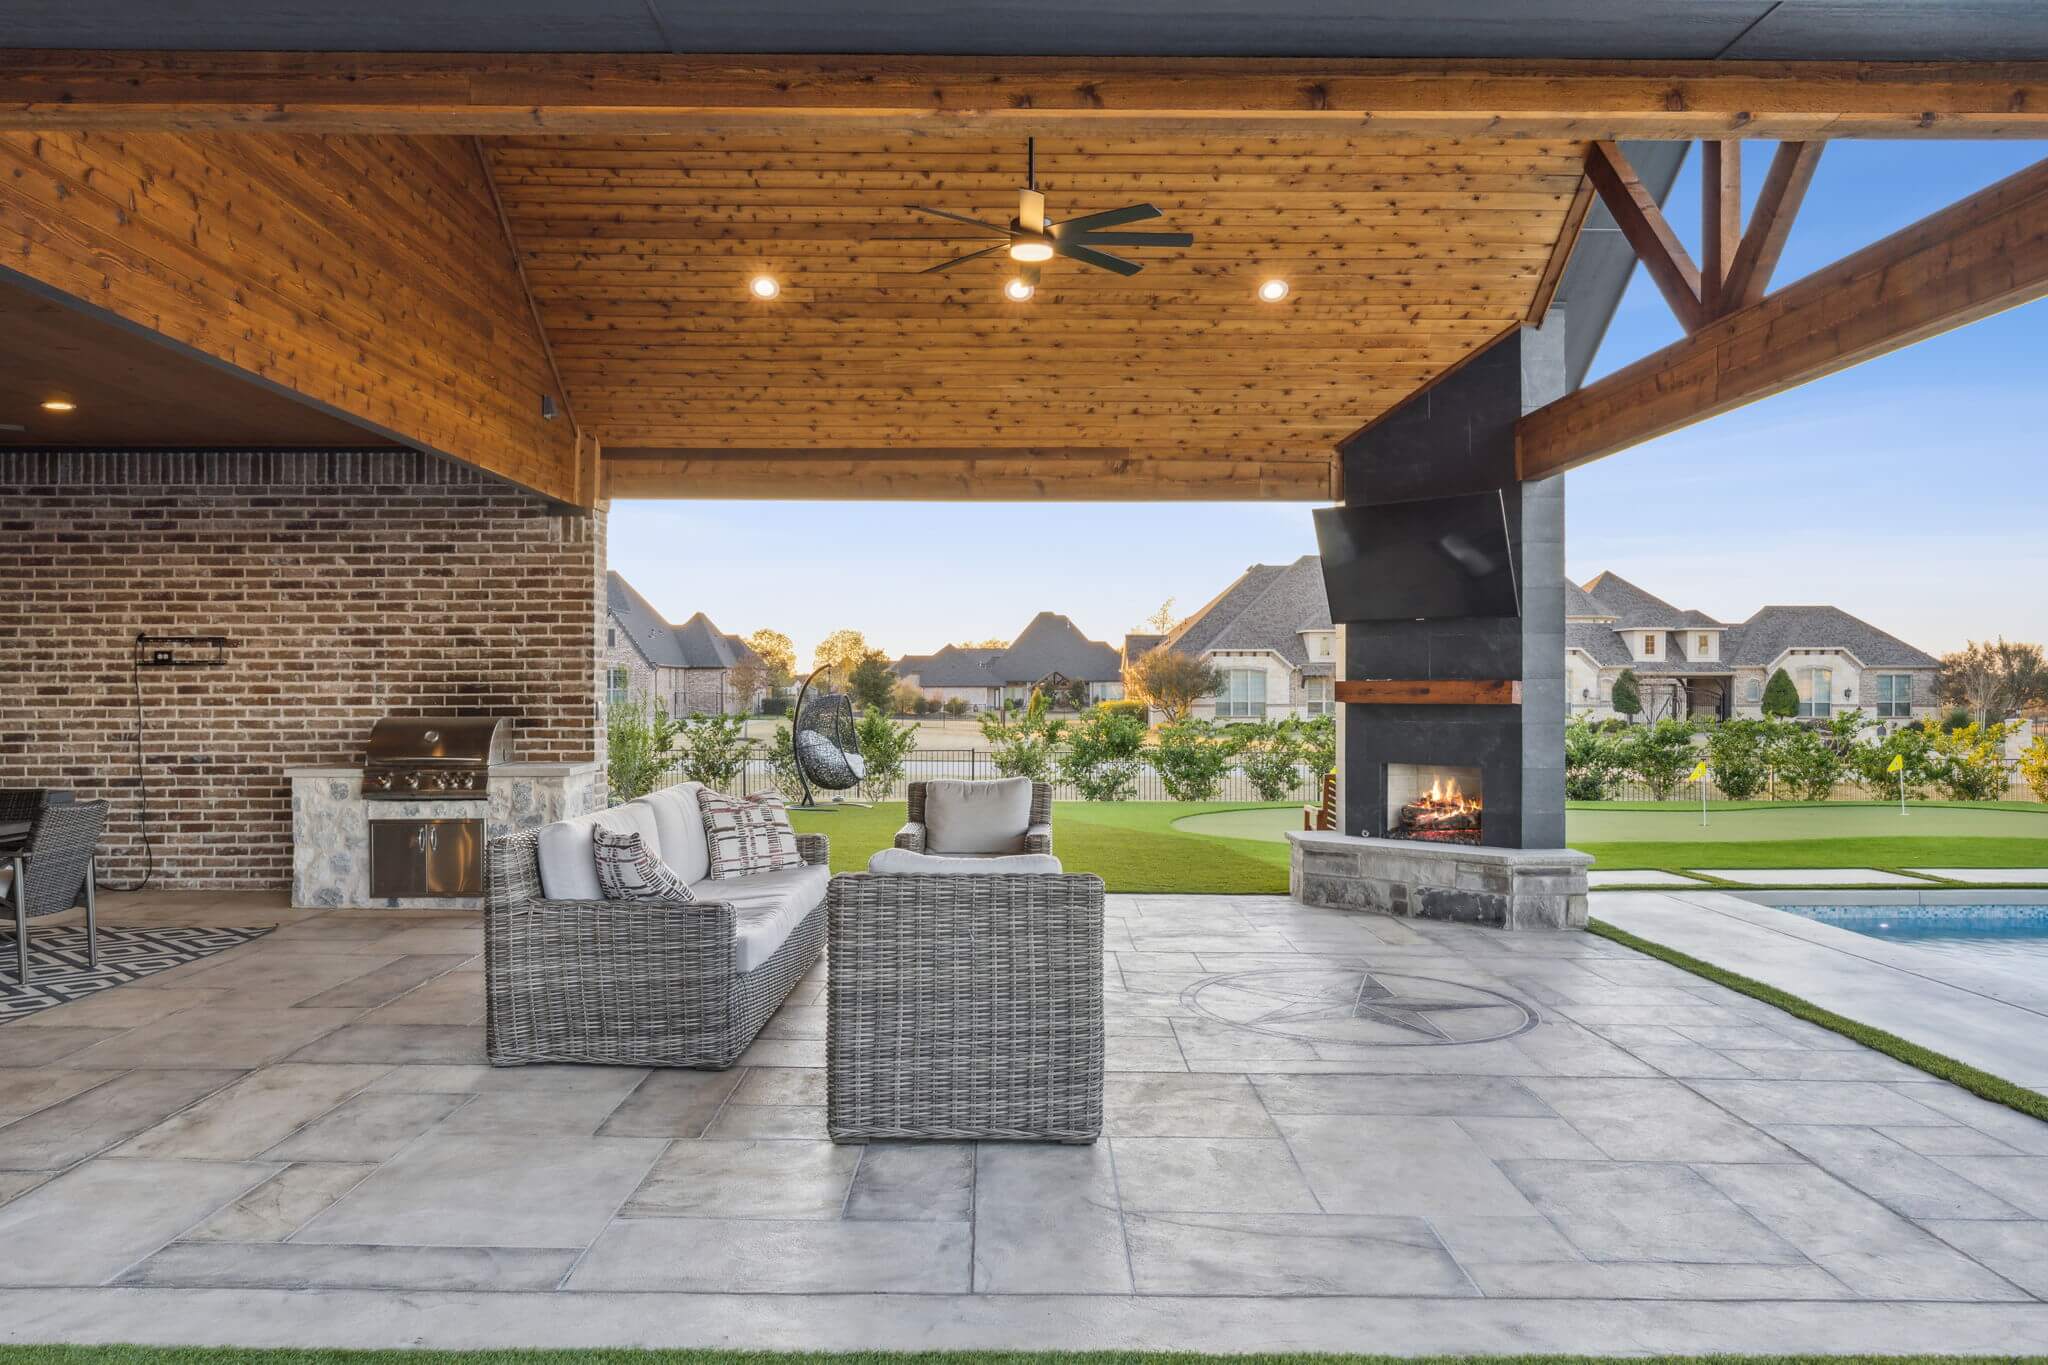 Outdoor living patio carvestone flooring and fireplace custom built